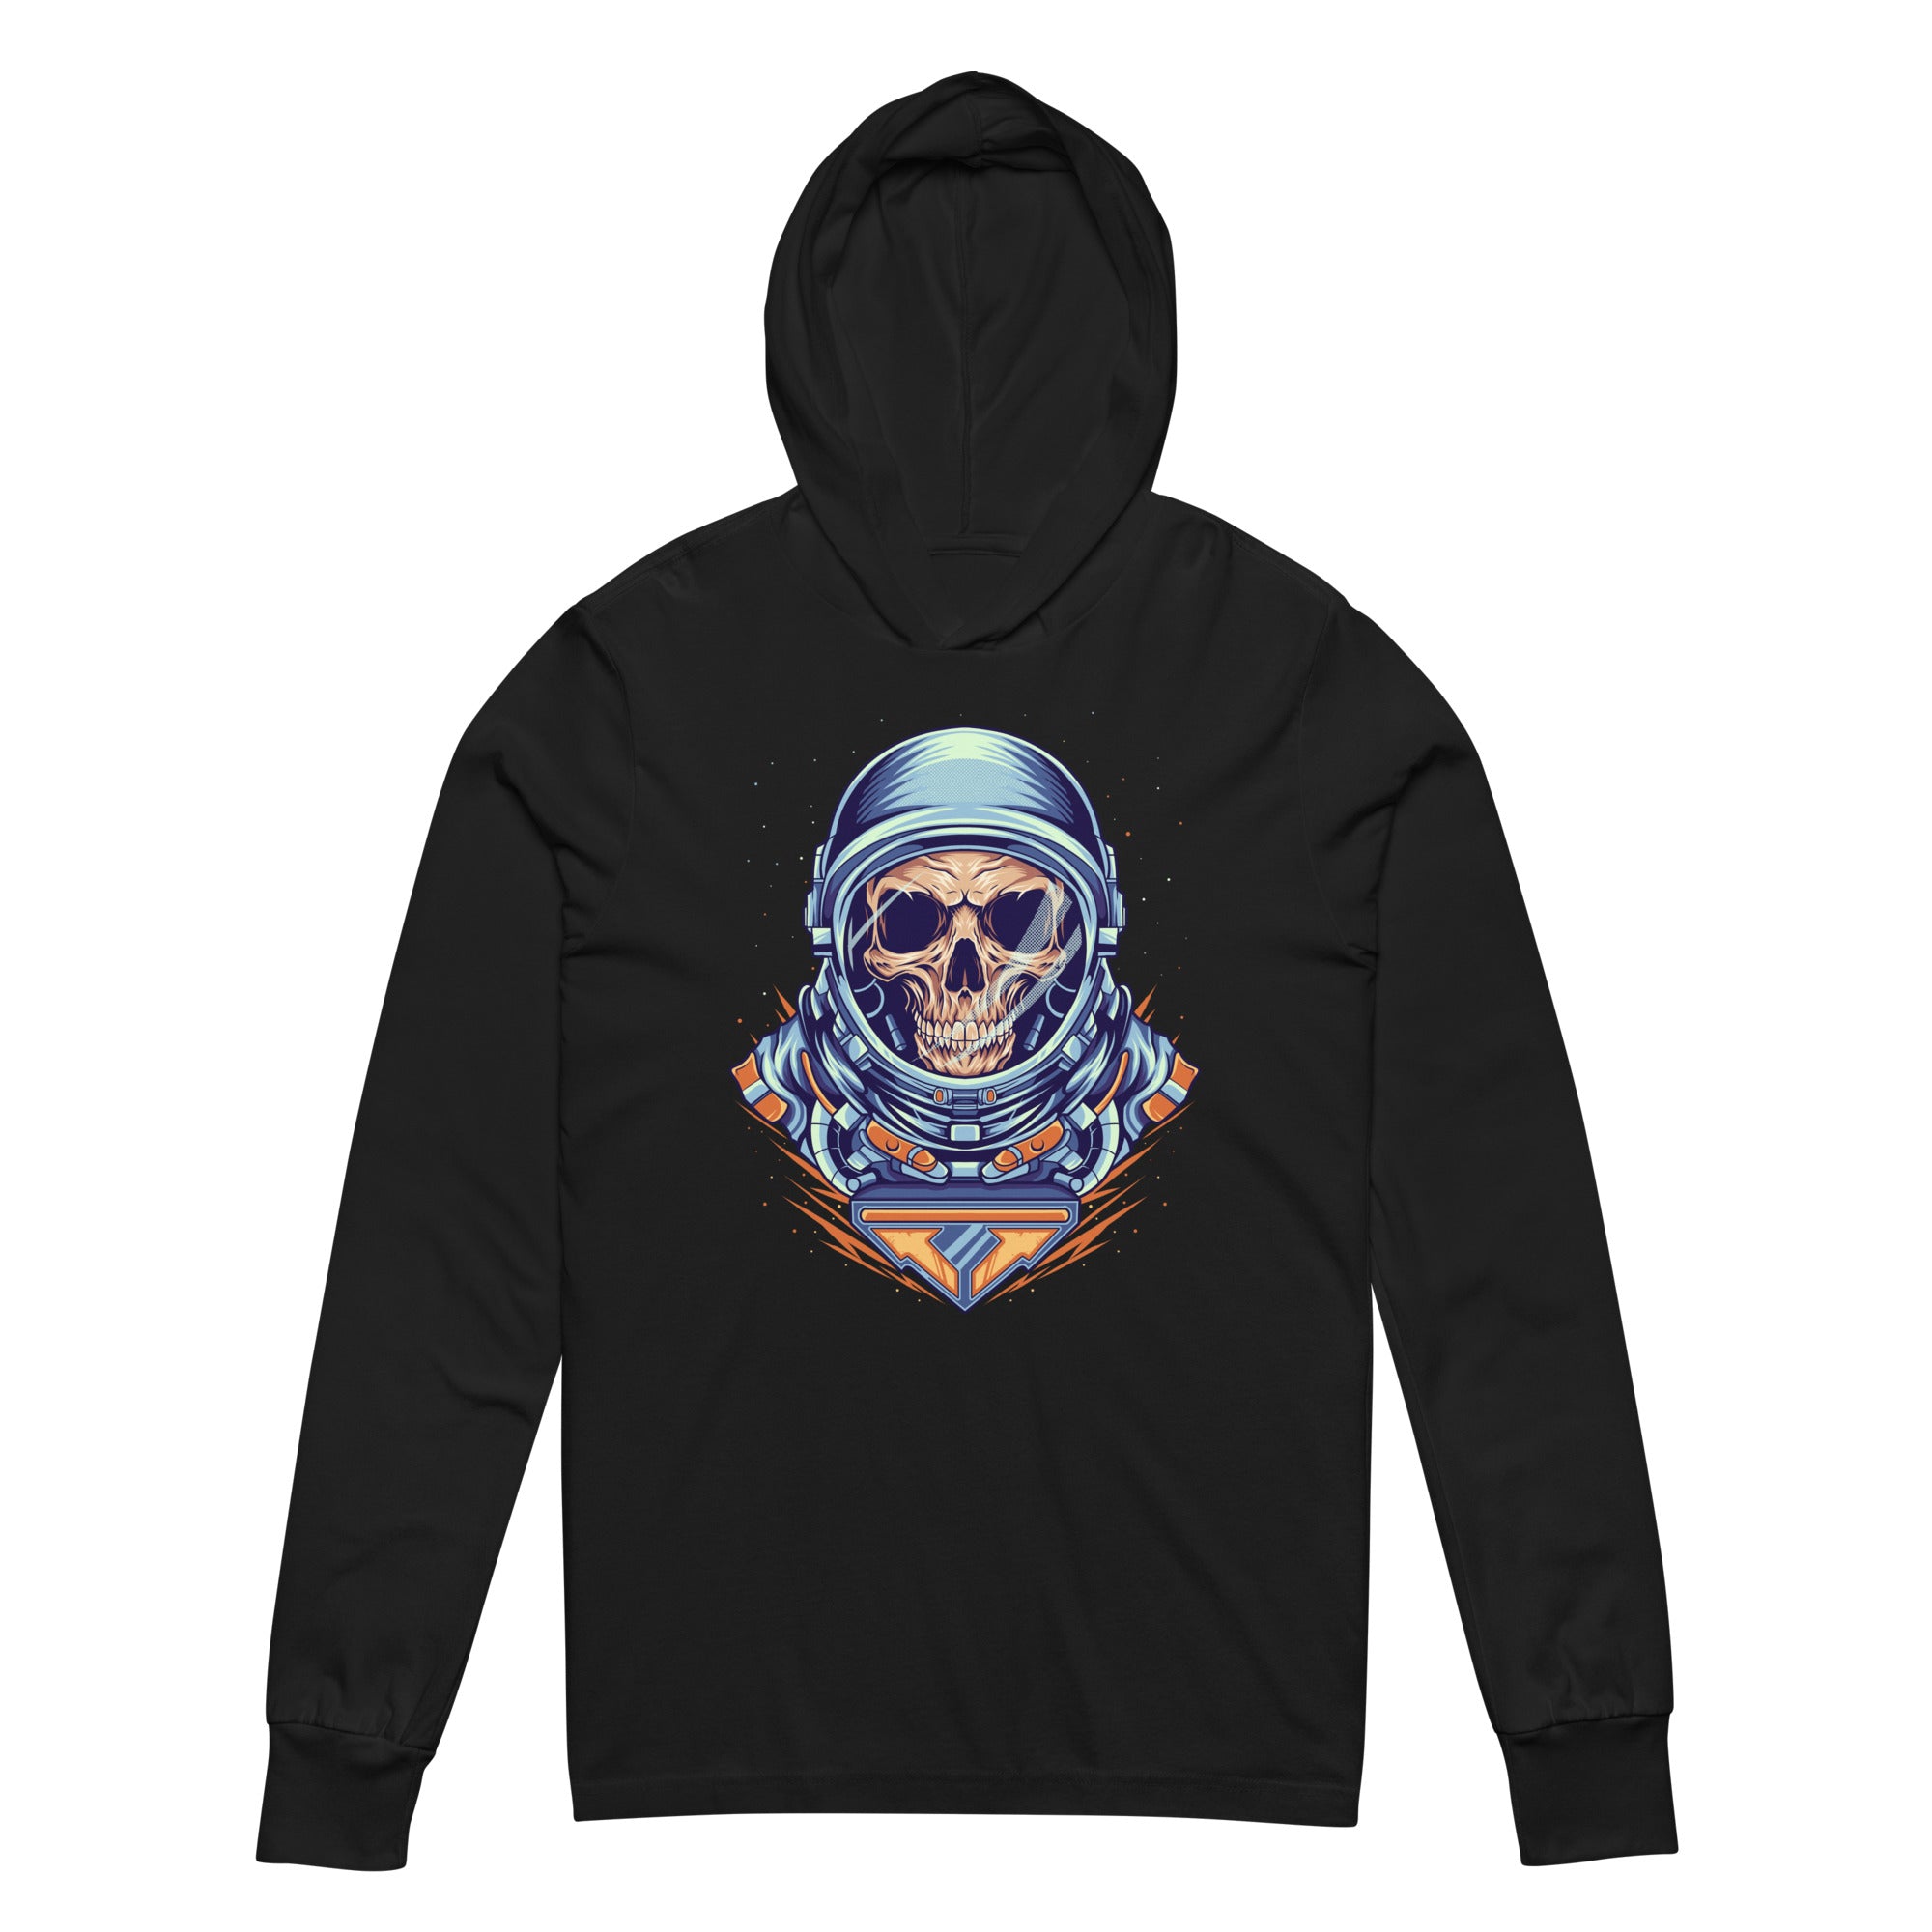 Skull Art in Space in Unisex Adult Hooded long-sleeve tee - The Space Store